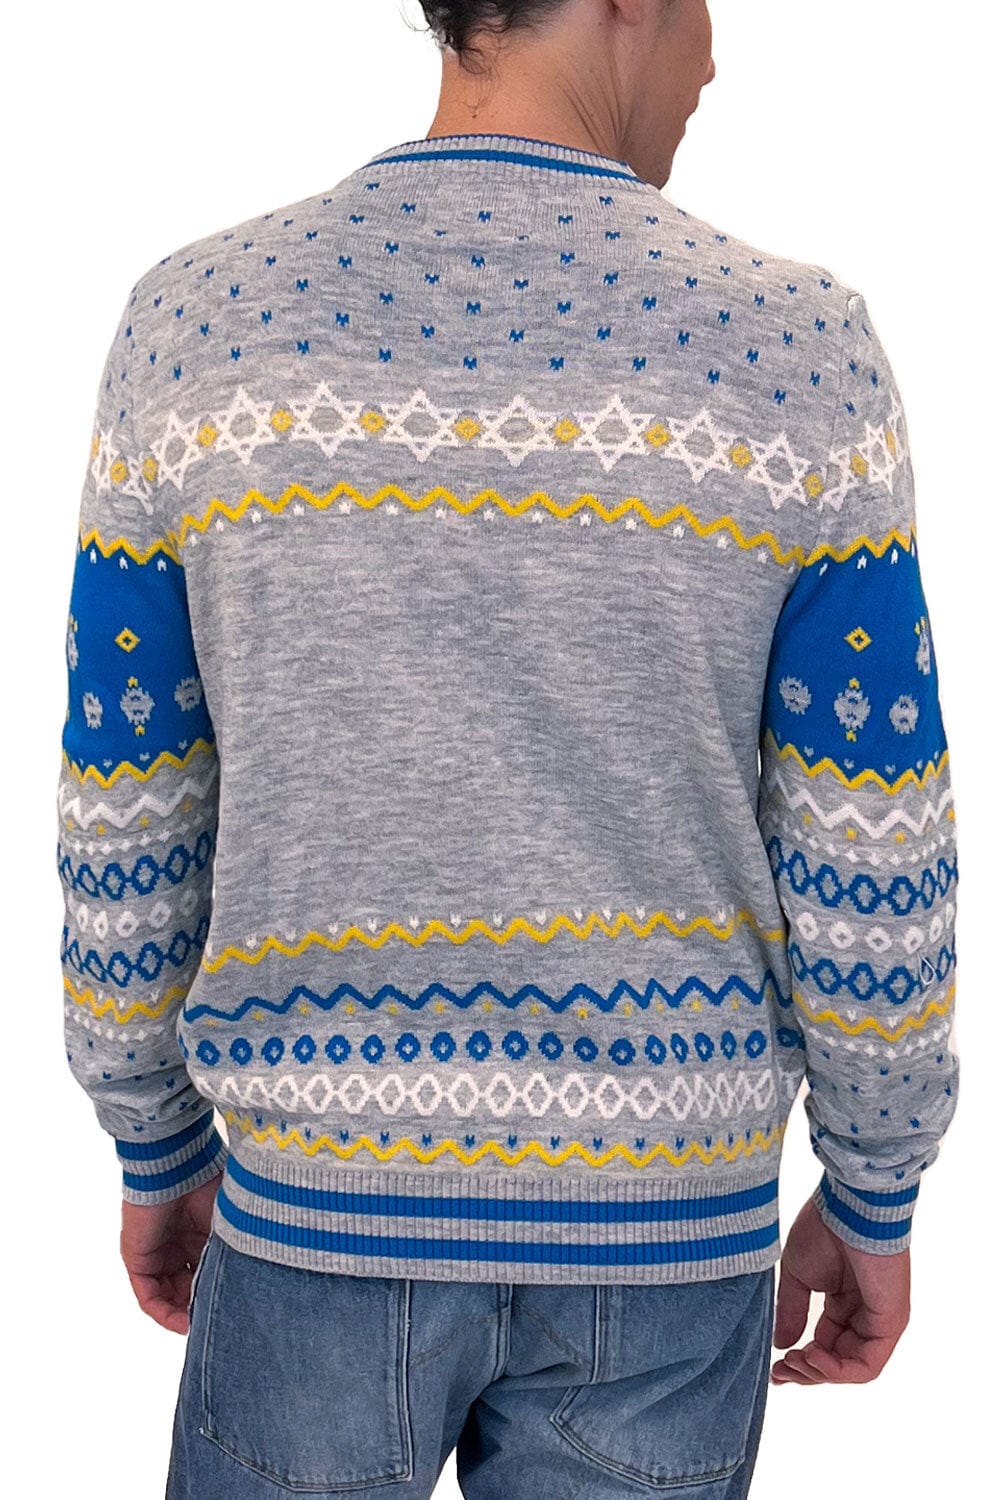 Tipsy Elves Sweaters Men's Reversible Menorah Sequin Sweater by Tipsy Elves